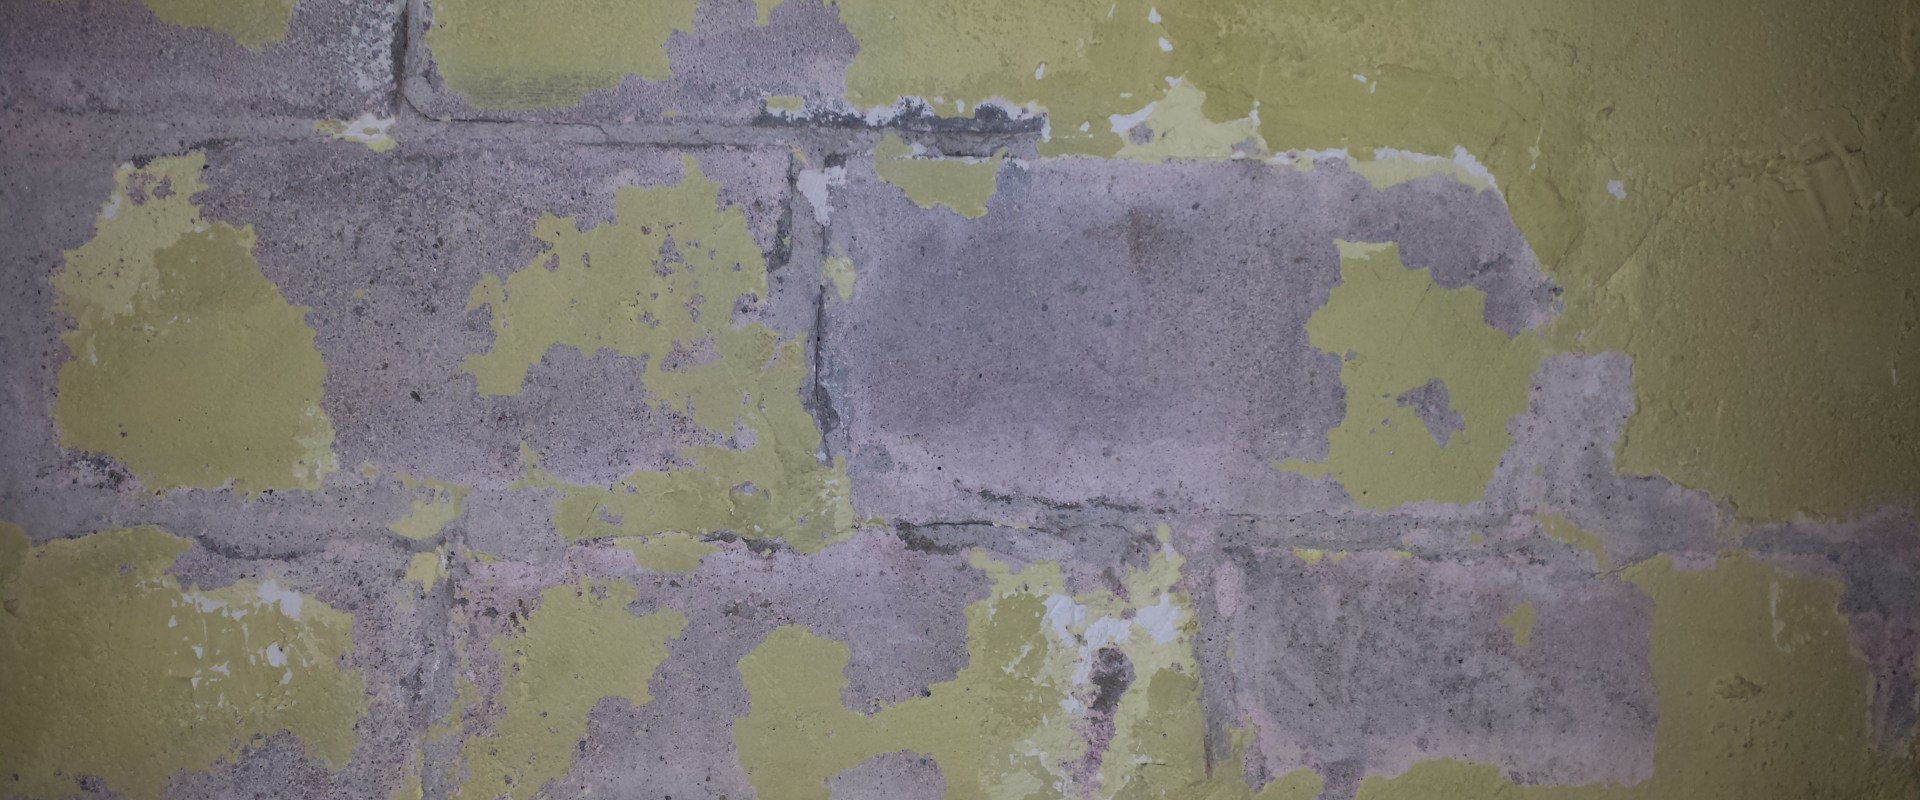 How to Repair Water-Damaged Concrete Block Walls